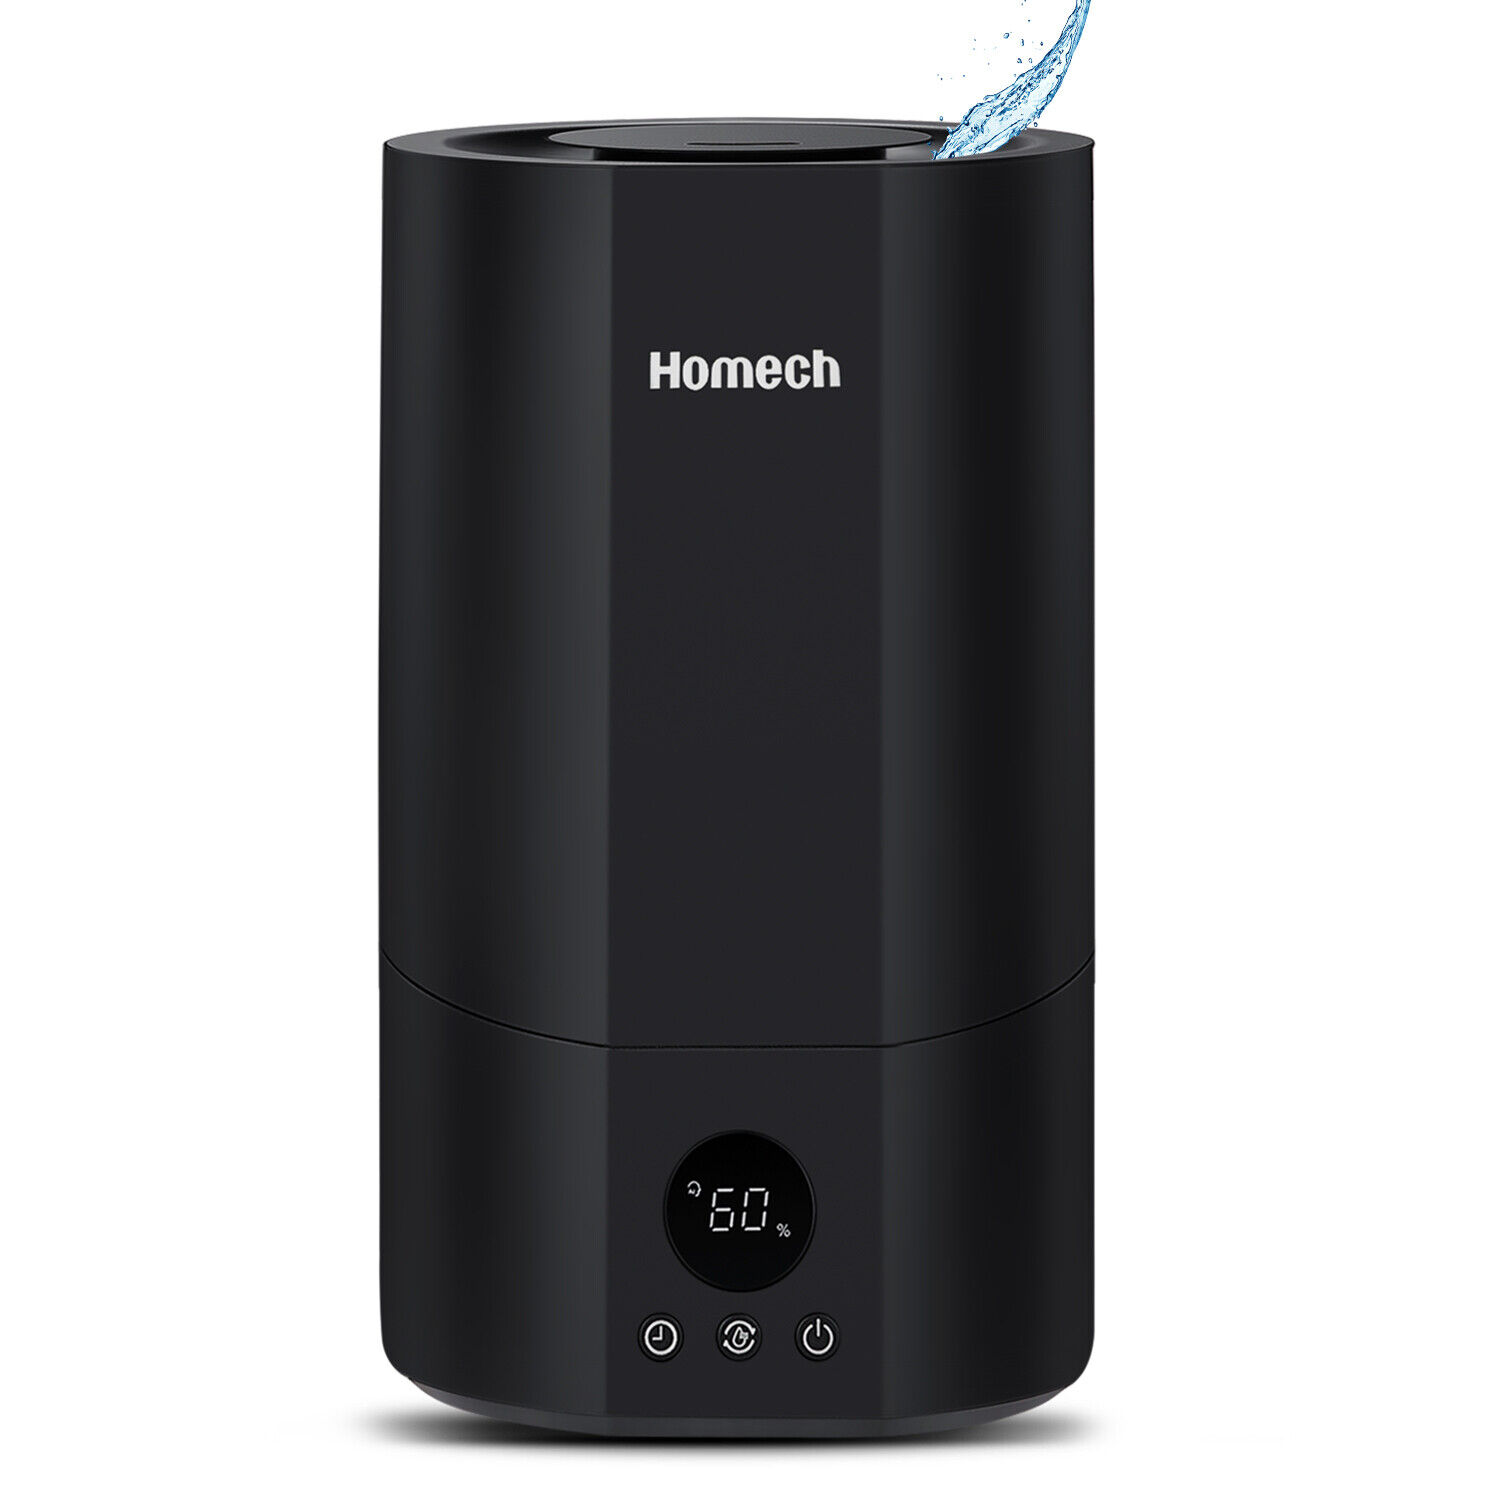 Homech Cool Mist Humidifier 4L Top Fill Quiet Ultrasonic Humidifier home office